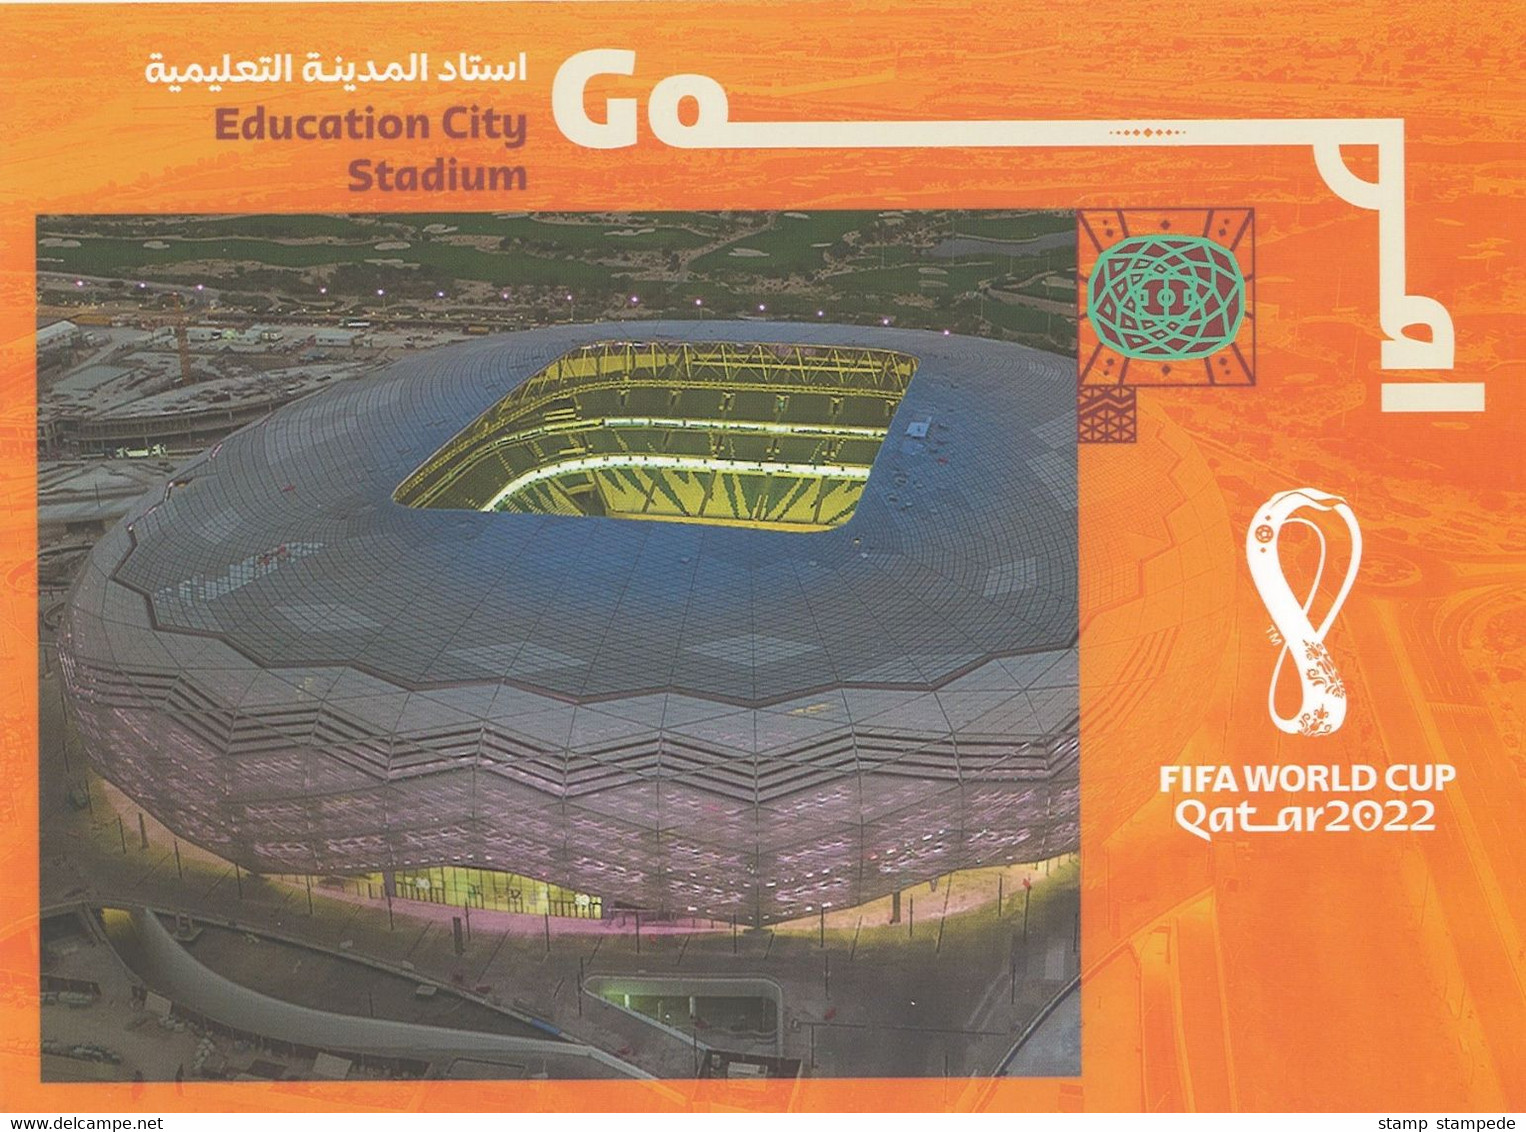 EDUCATION CITY STADIUM QATAR - 2022 FIFA WORLD CUP SOCCER FOOTBALL - OFFICIAL POSTCARD, STAMP & FIRST DAY CANCELLATION - 2022 – Qatar